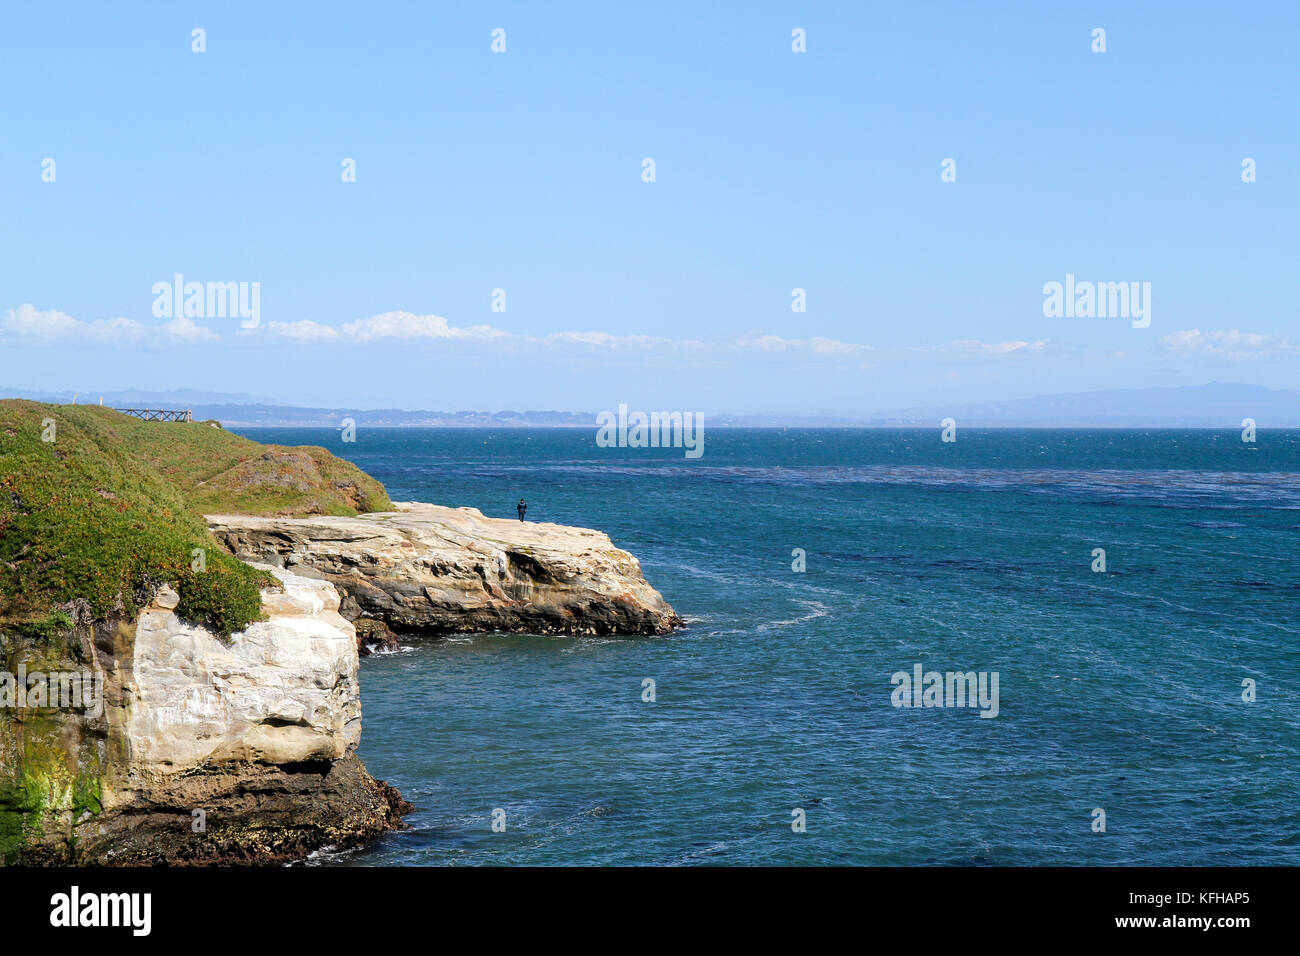 Cliffs on the ocean, Santa Cruz, California, United States Stock Photo